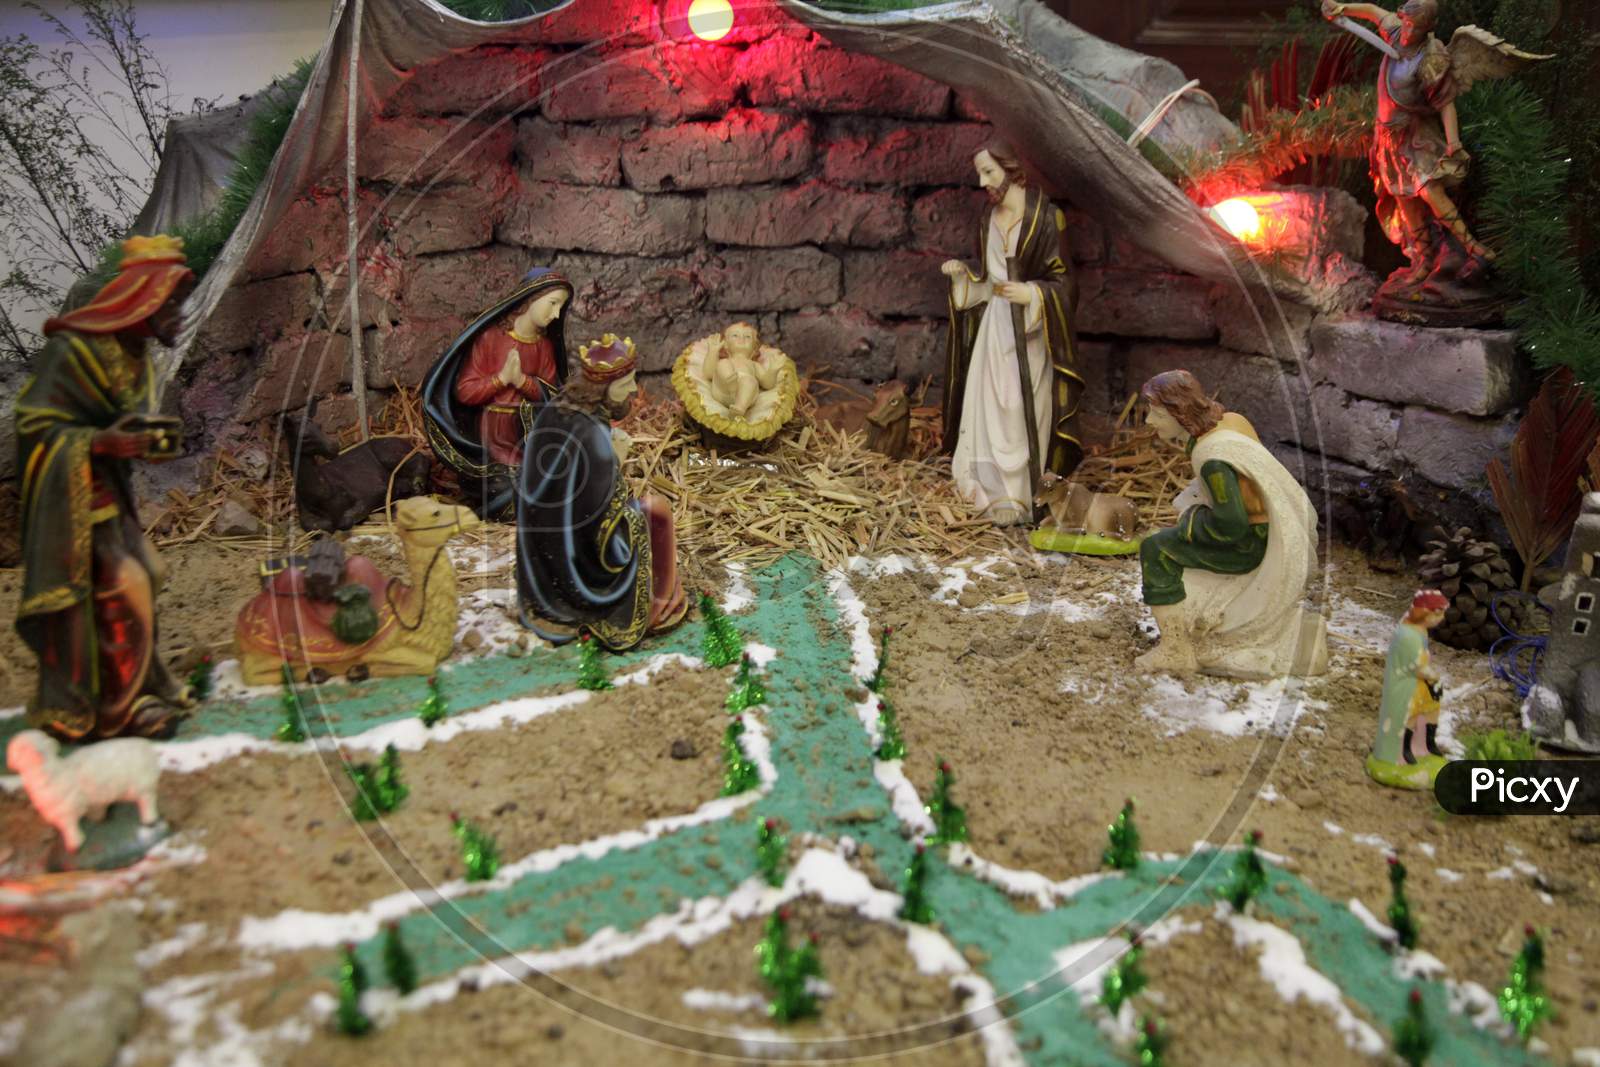 Concept of Jesus Birth Story / Christmas Story